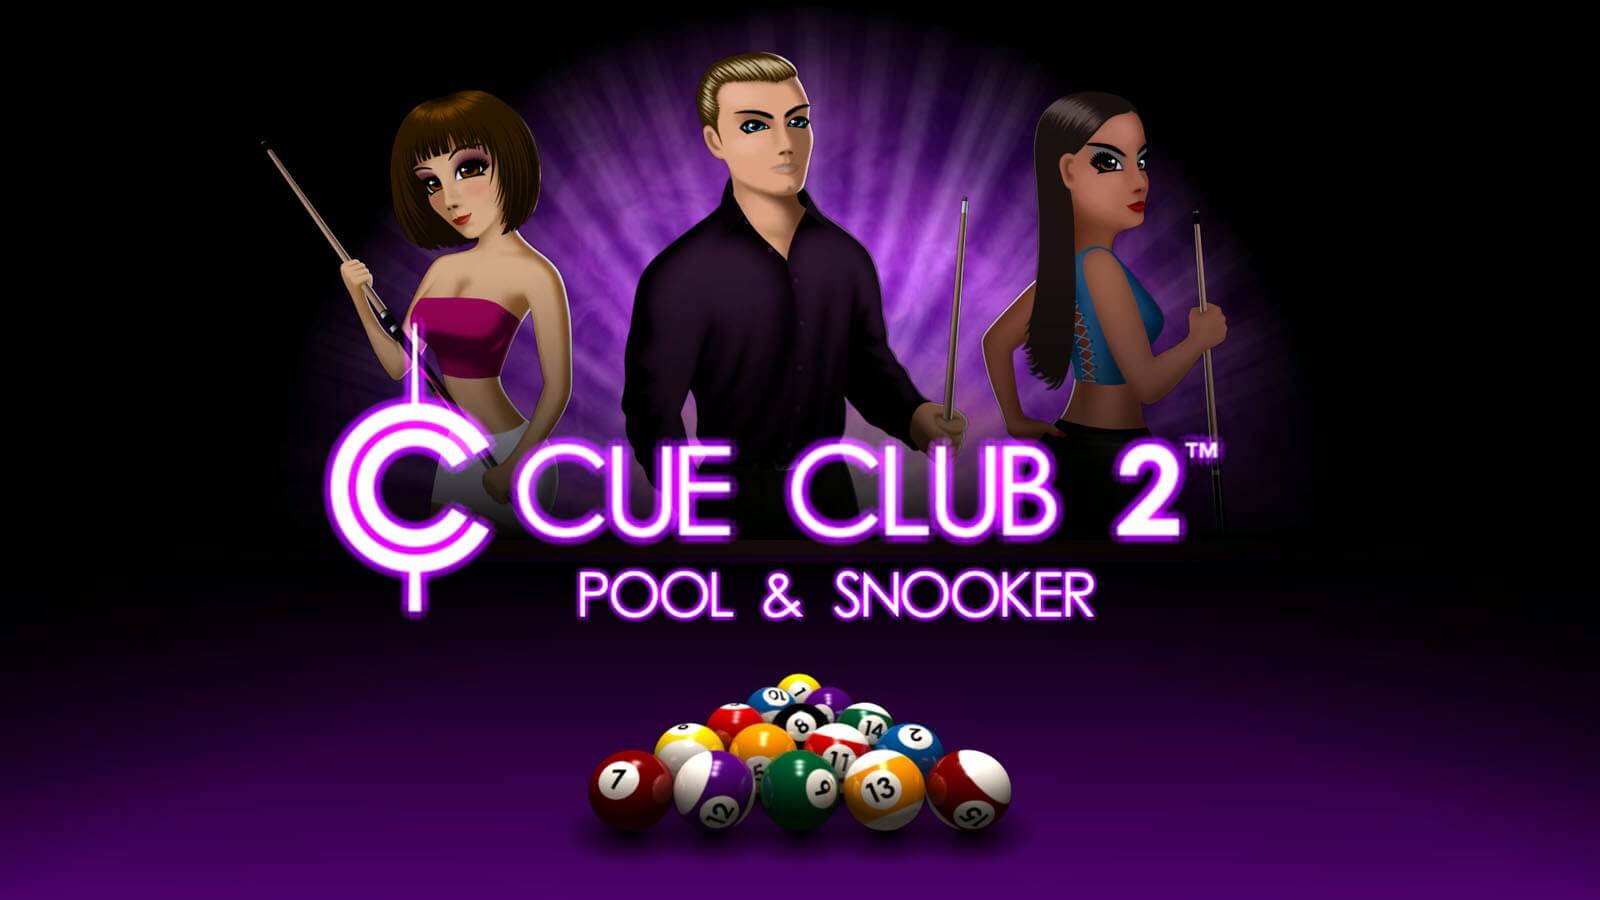 Players club 2. Cue Club 2: Pool & Snooker. Cue Club download. Cue игра. Cue Club на андроид.